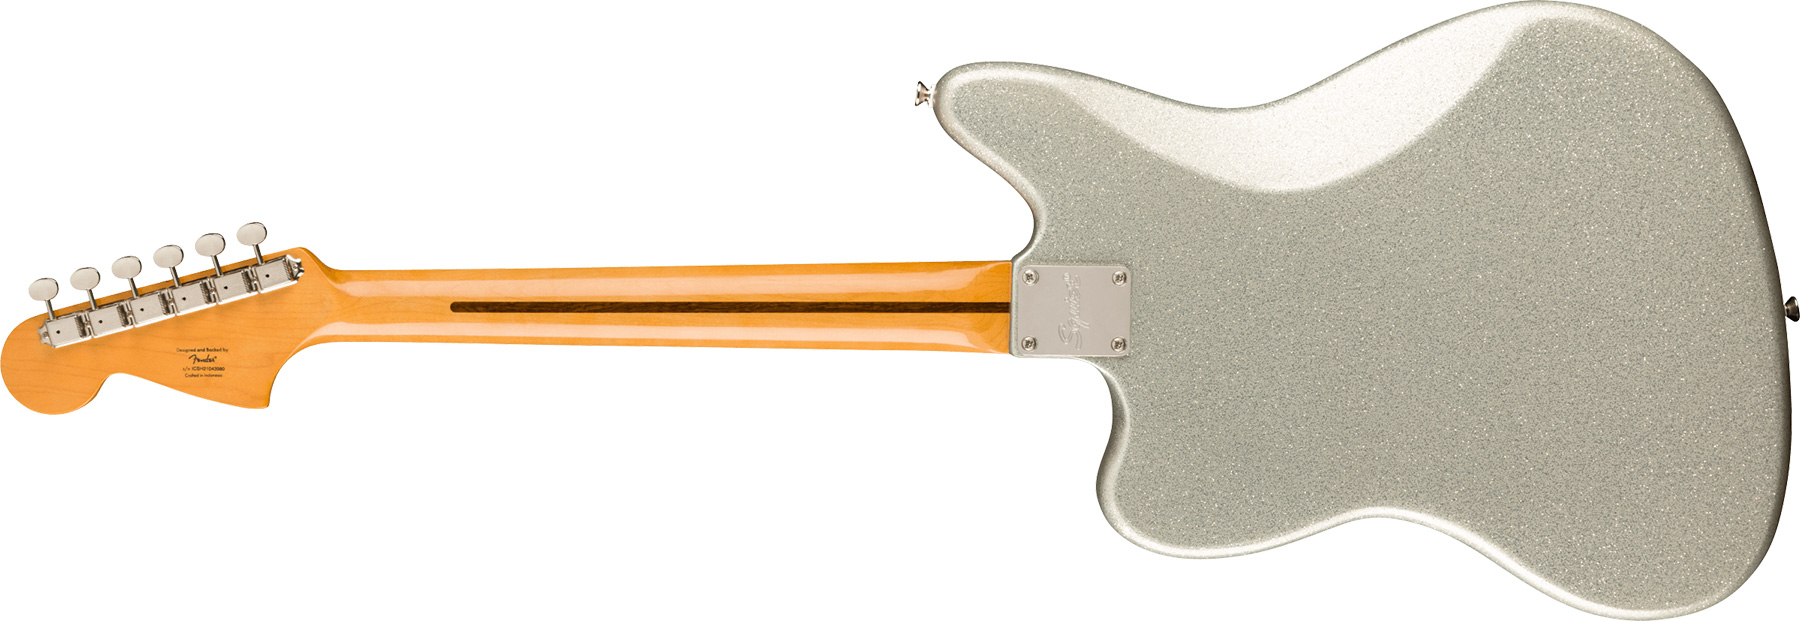 Squier Jaguar 60s Classic Vibe Fsr Ltd 2s Trem Lau - Silver Sparkle Matching Headstock - Retro-rock elektrische gitaar - Variation 1